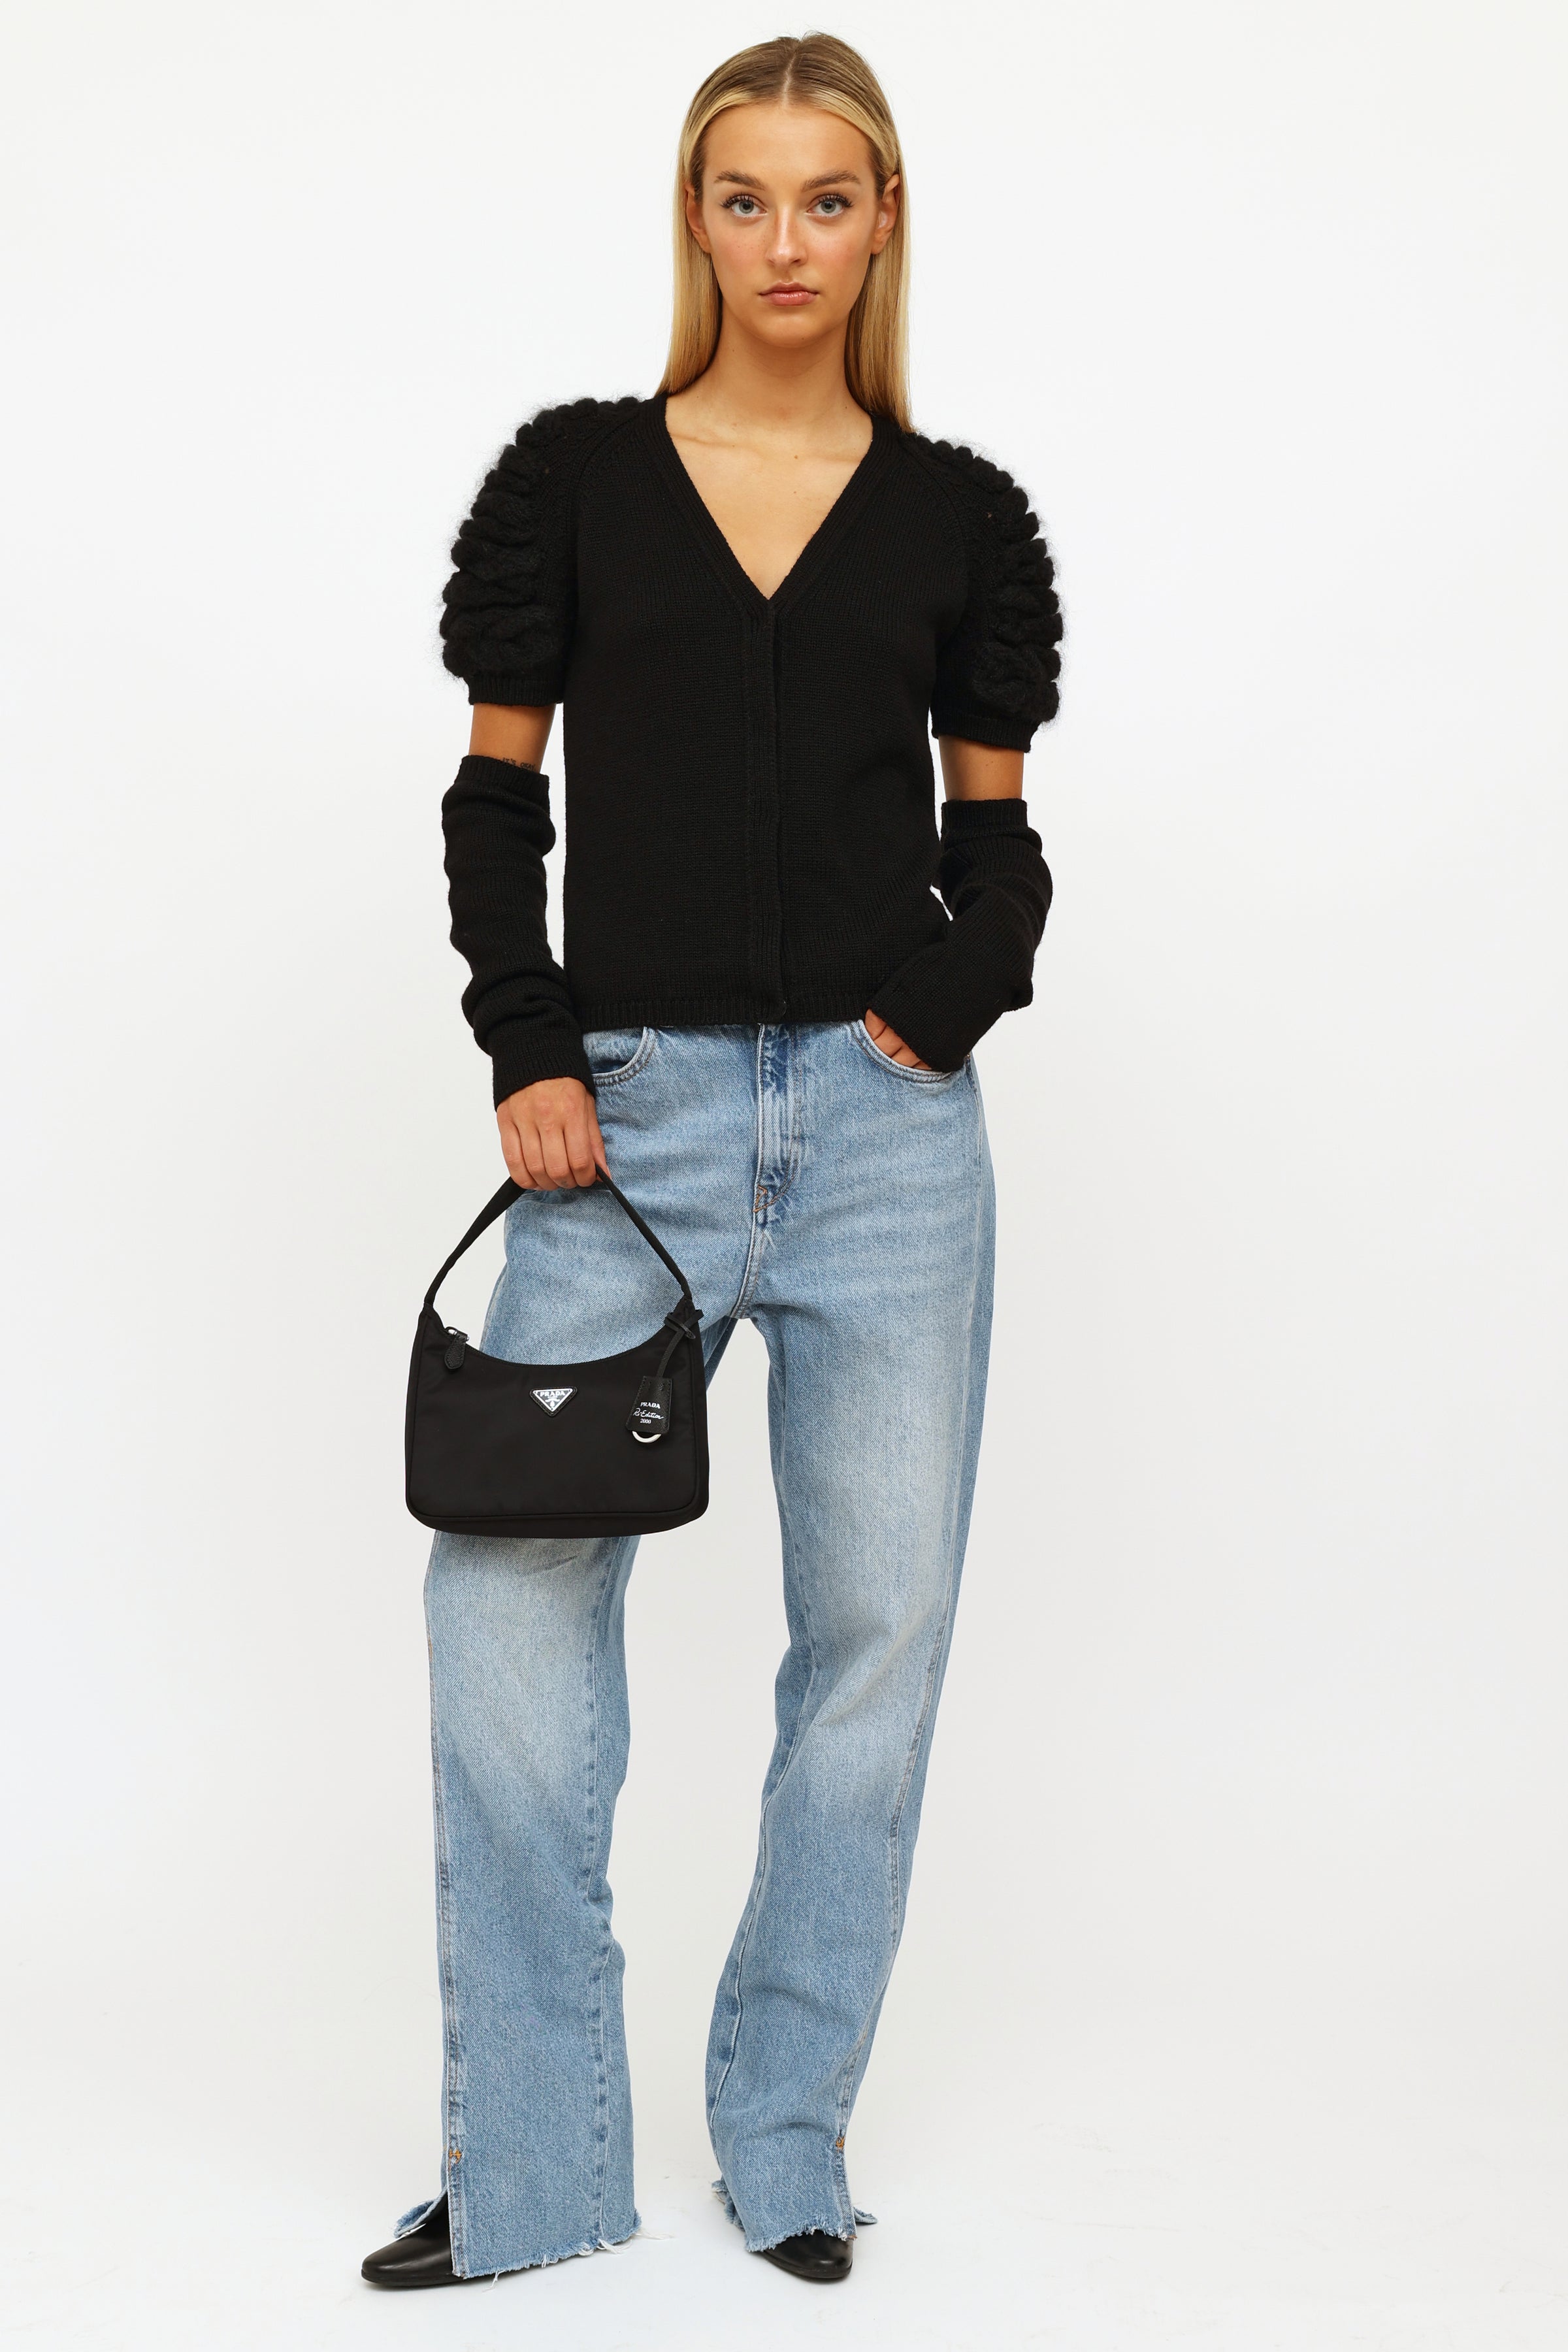 Prada Re-edition 2000 Mini Shoulder Bag in Black